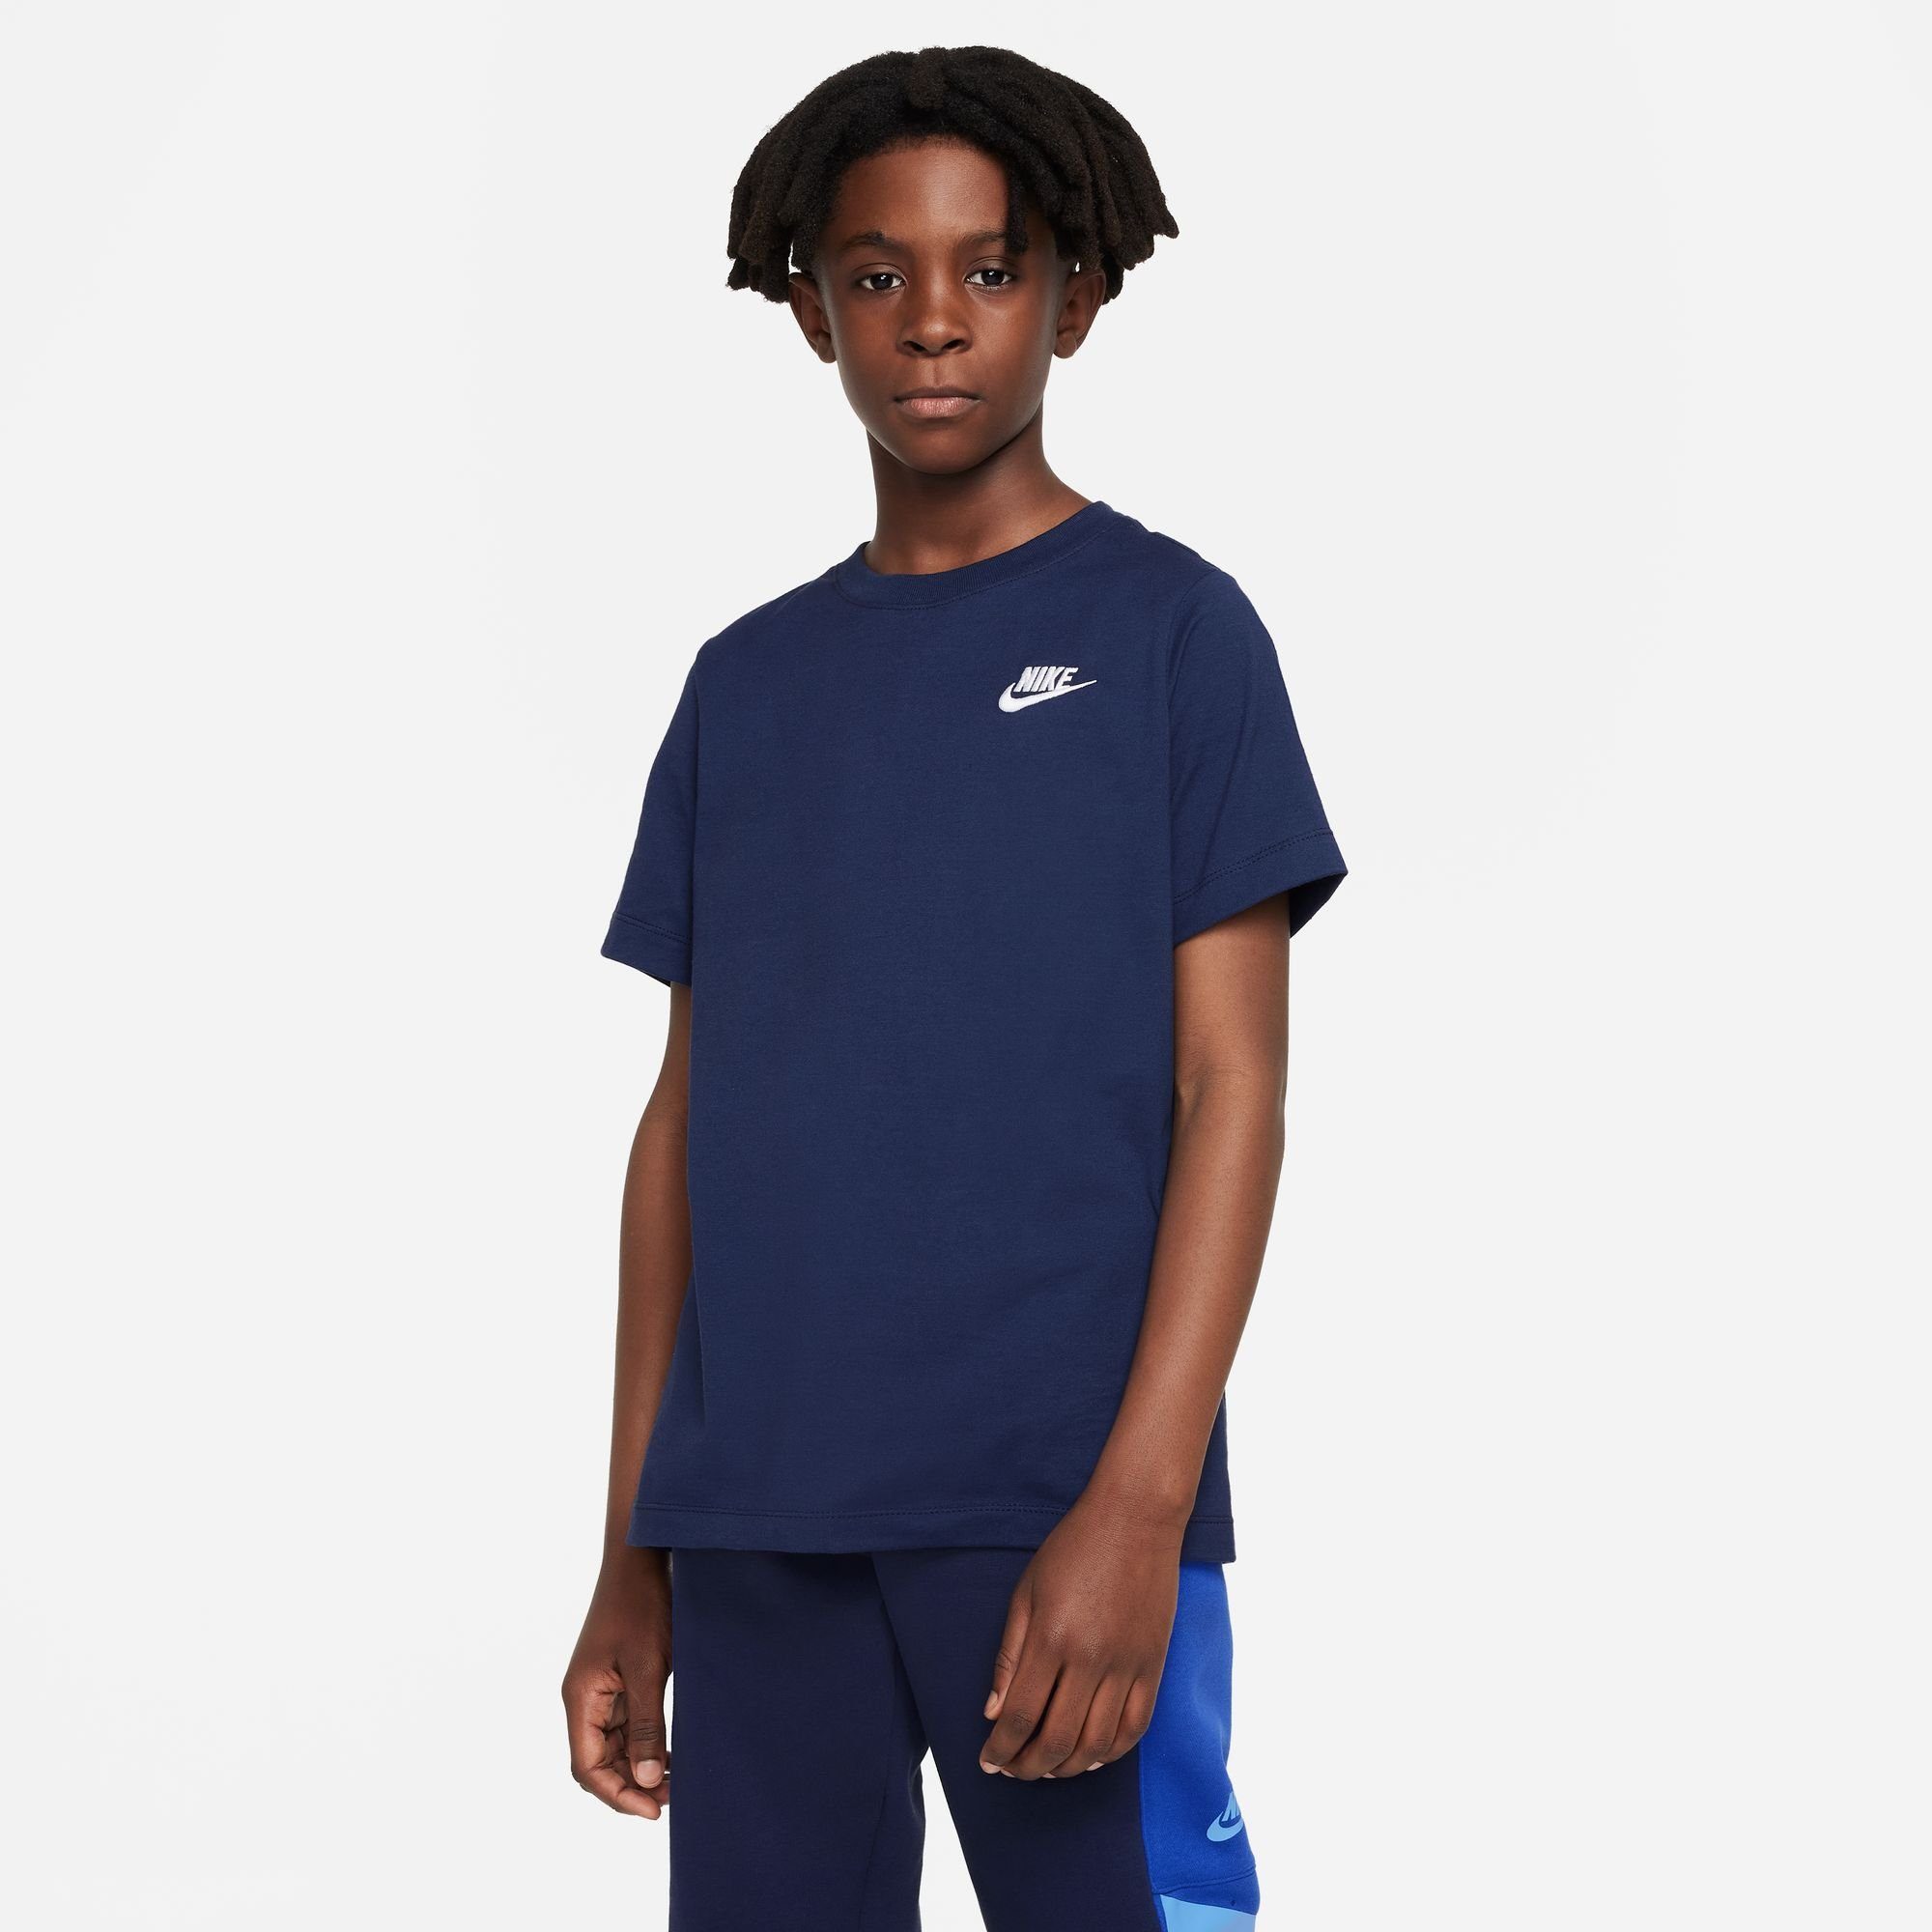 BIG KIDS' T-Shirt Nike blau Sportswear T-SHIRT